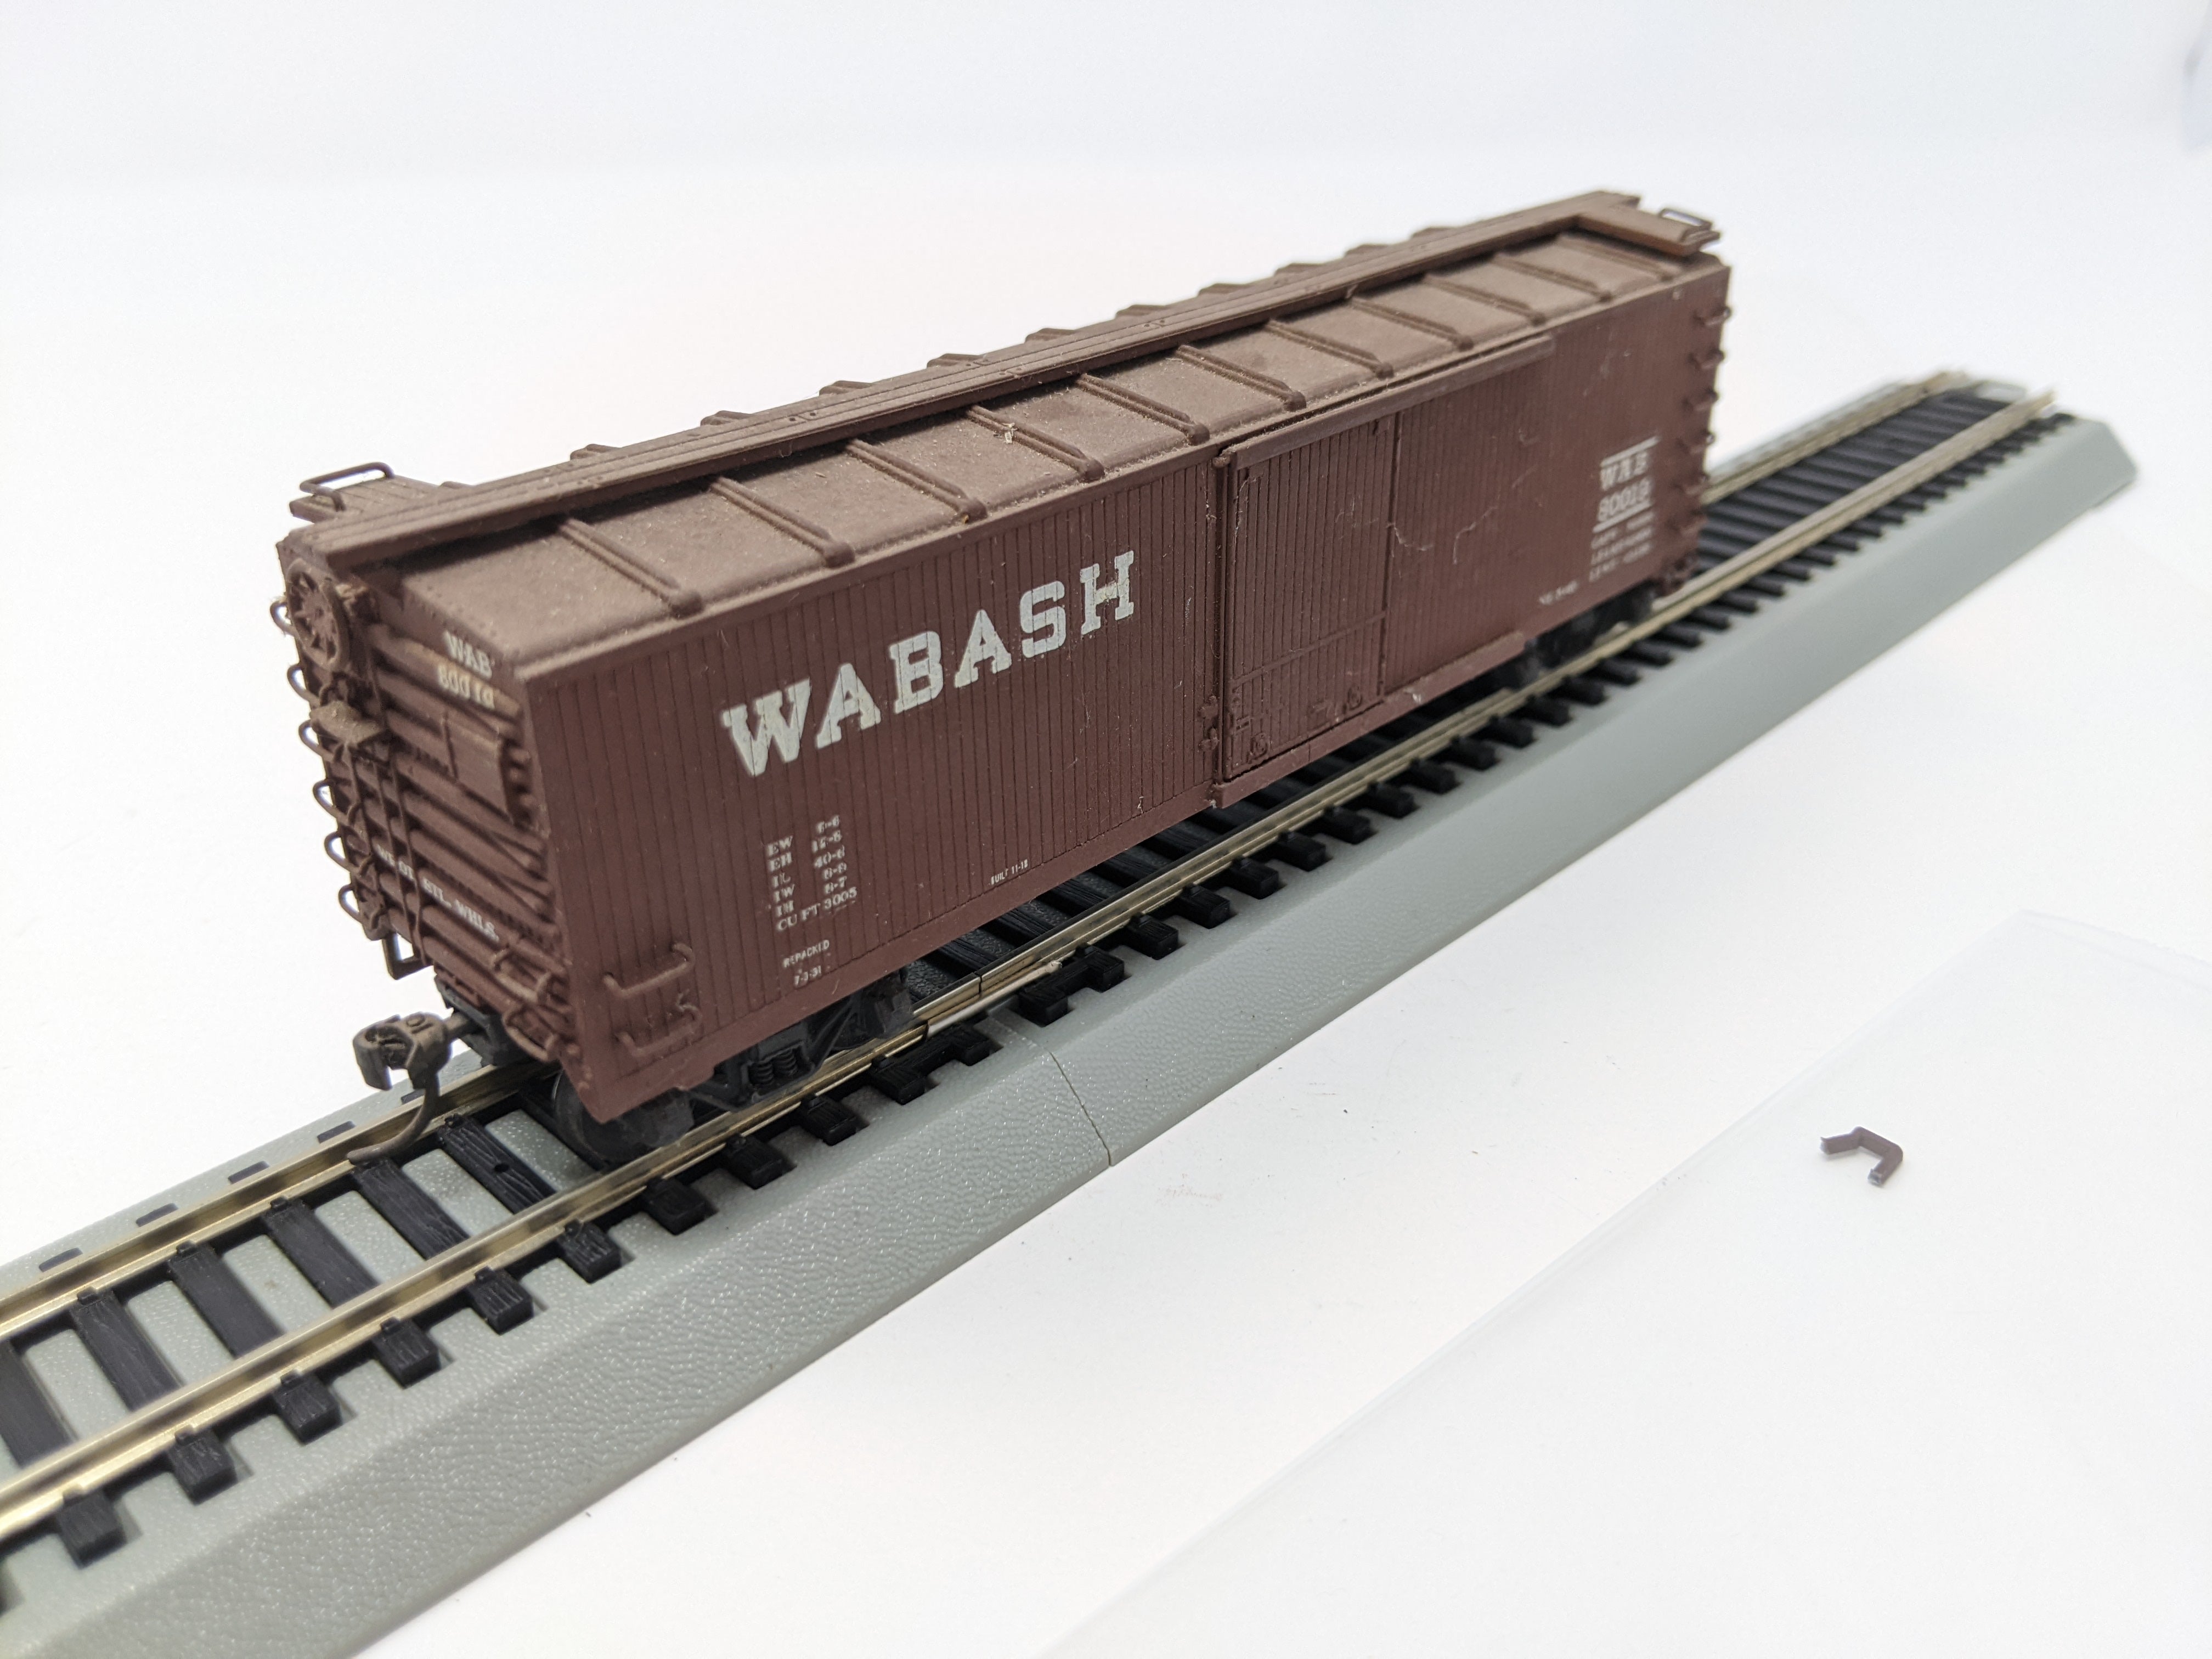 USED HO Scale, 40' Wooden Box Car, Wabash WAB #80019, Read Description